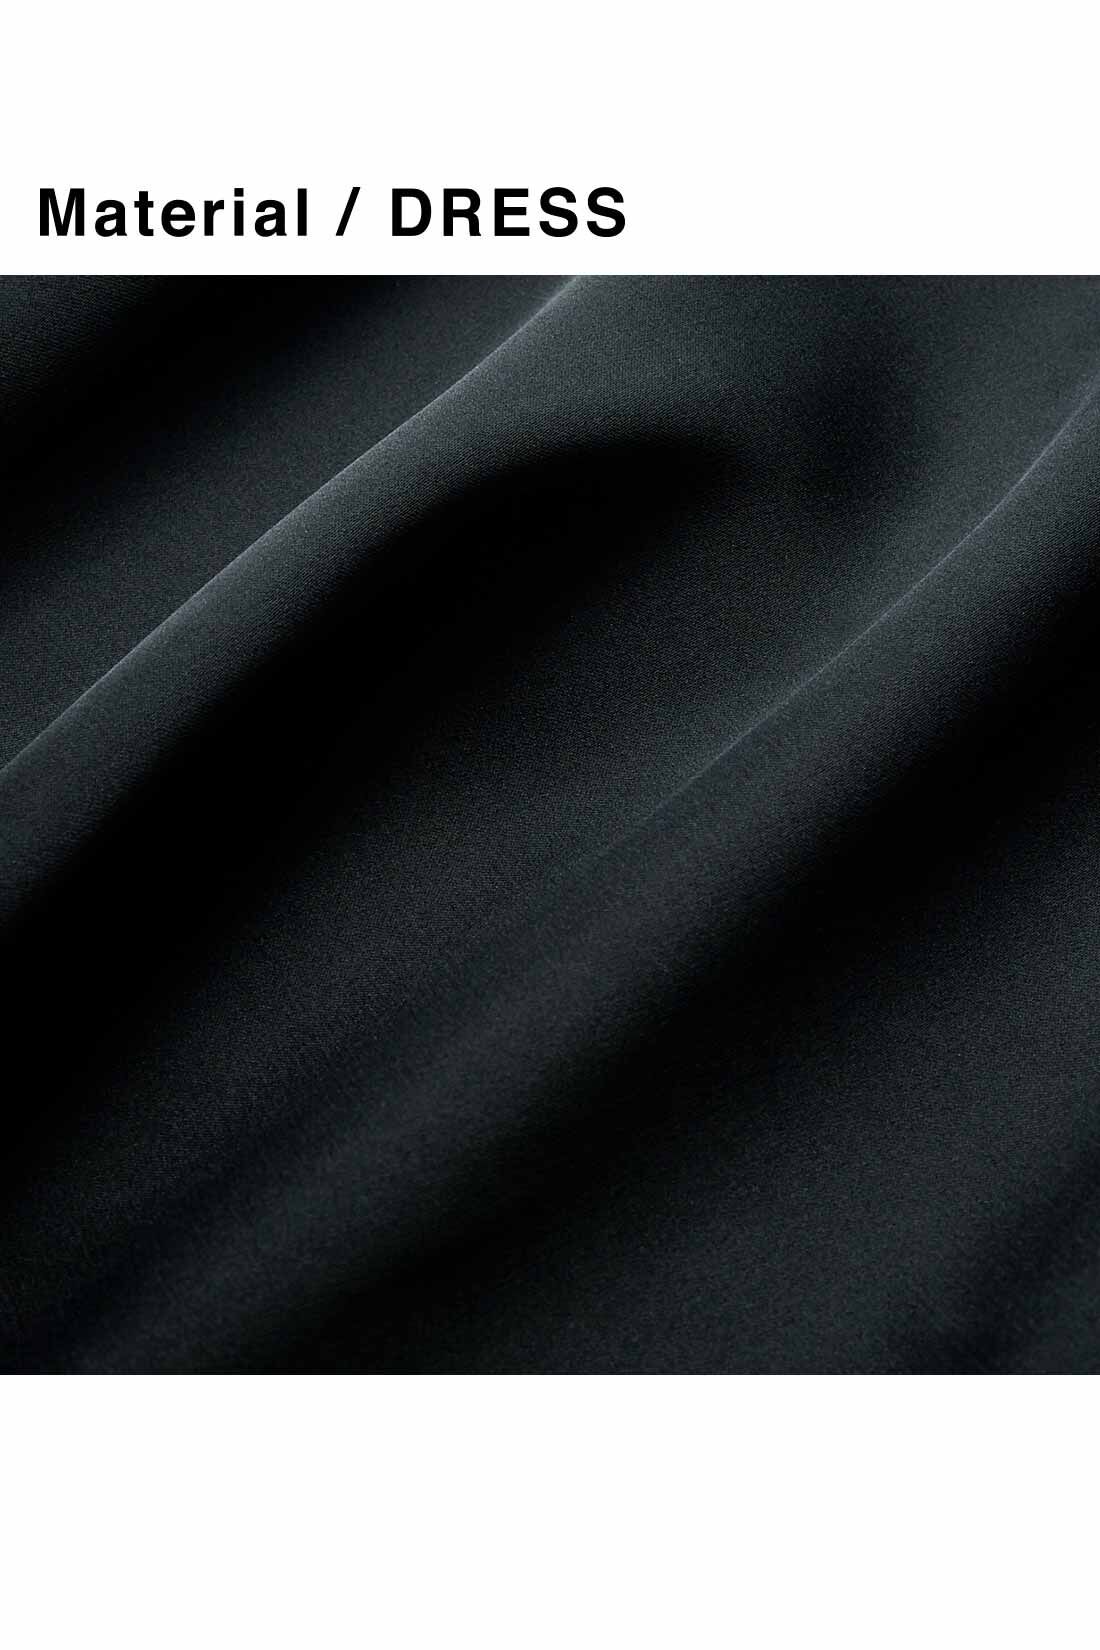 IEDIT|牧野紗弥さん×IEDIT[イディット]　キャミソールワンピース＆リブトップスの万能コーデセット〈スミクロ×チャコールグレー〉|ワンピースはリッチ見えする上品なつやのサテン素材。